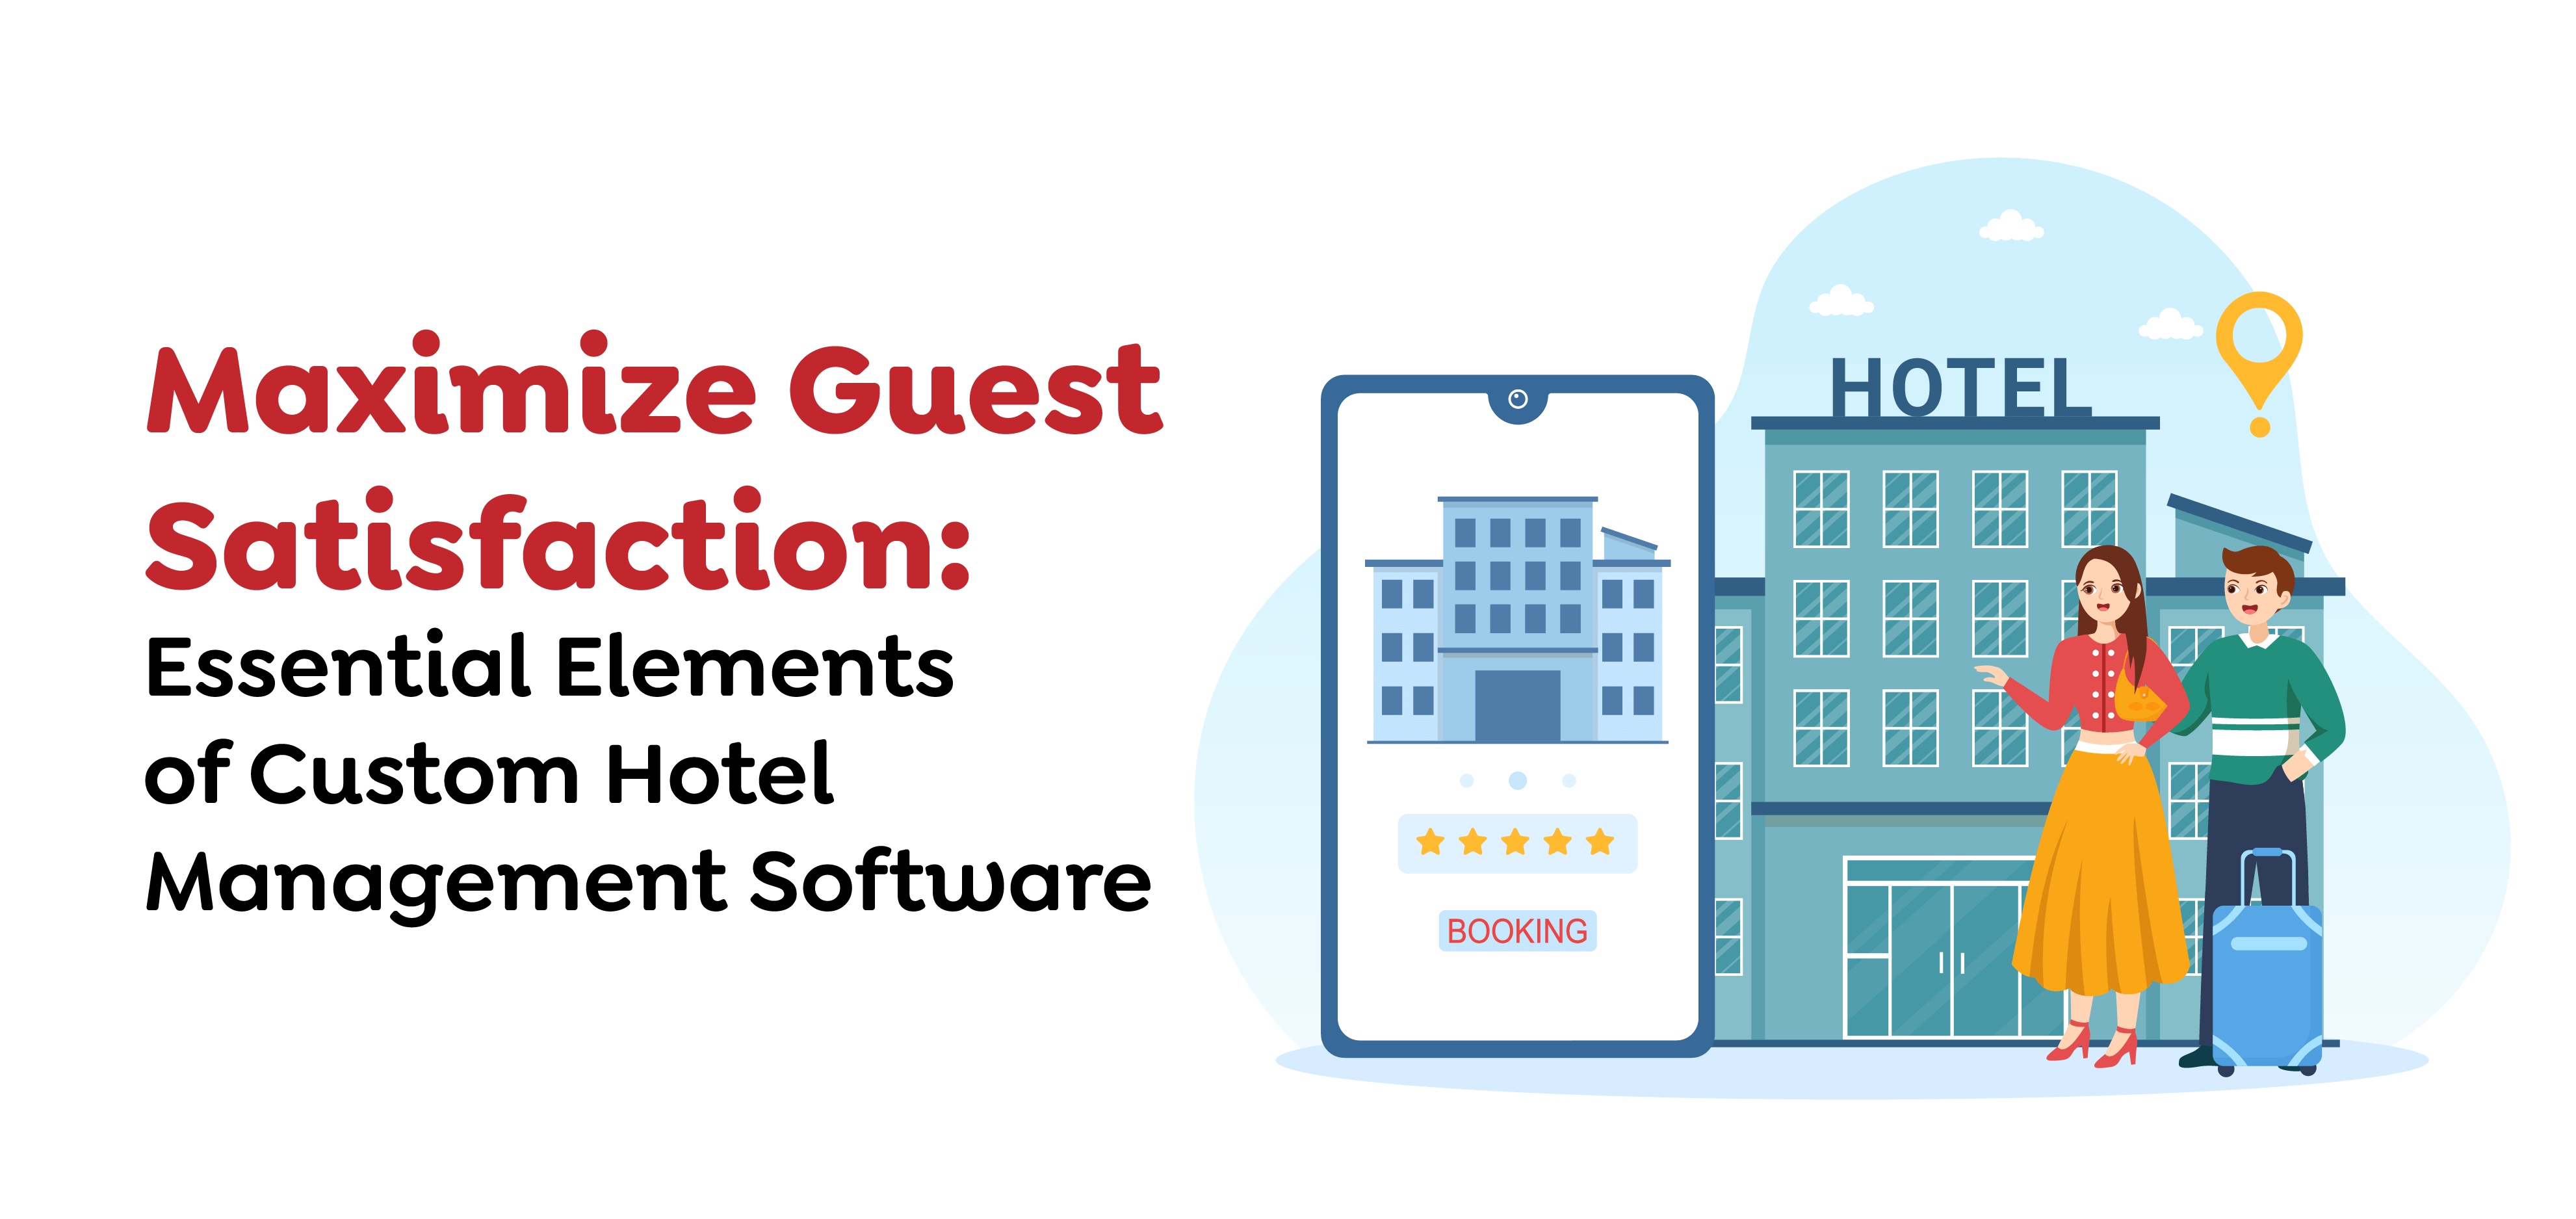 Custom Hotel Management Software